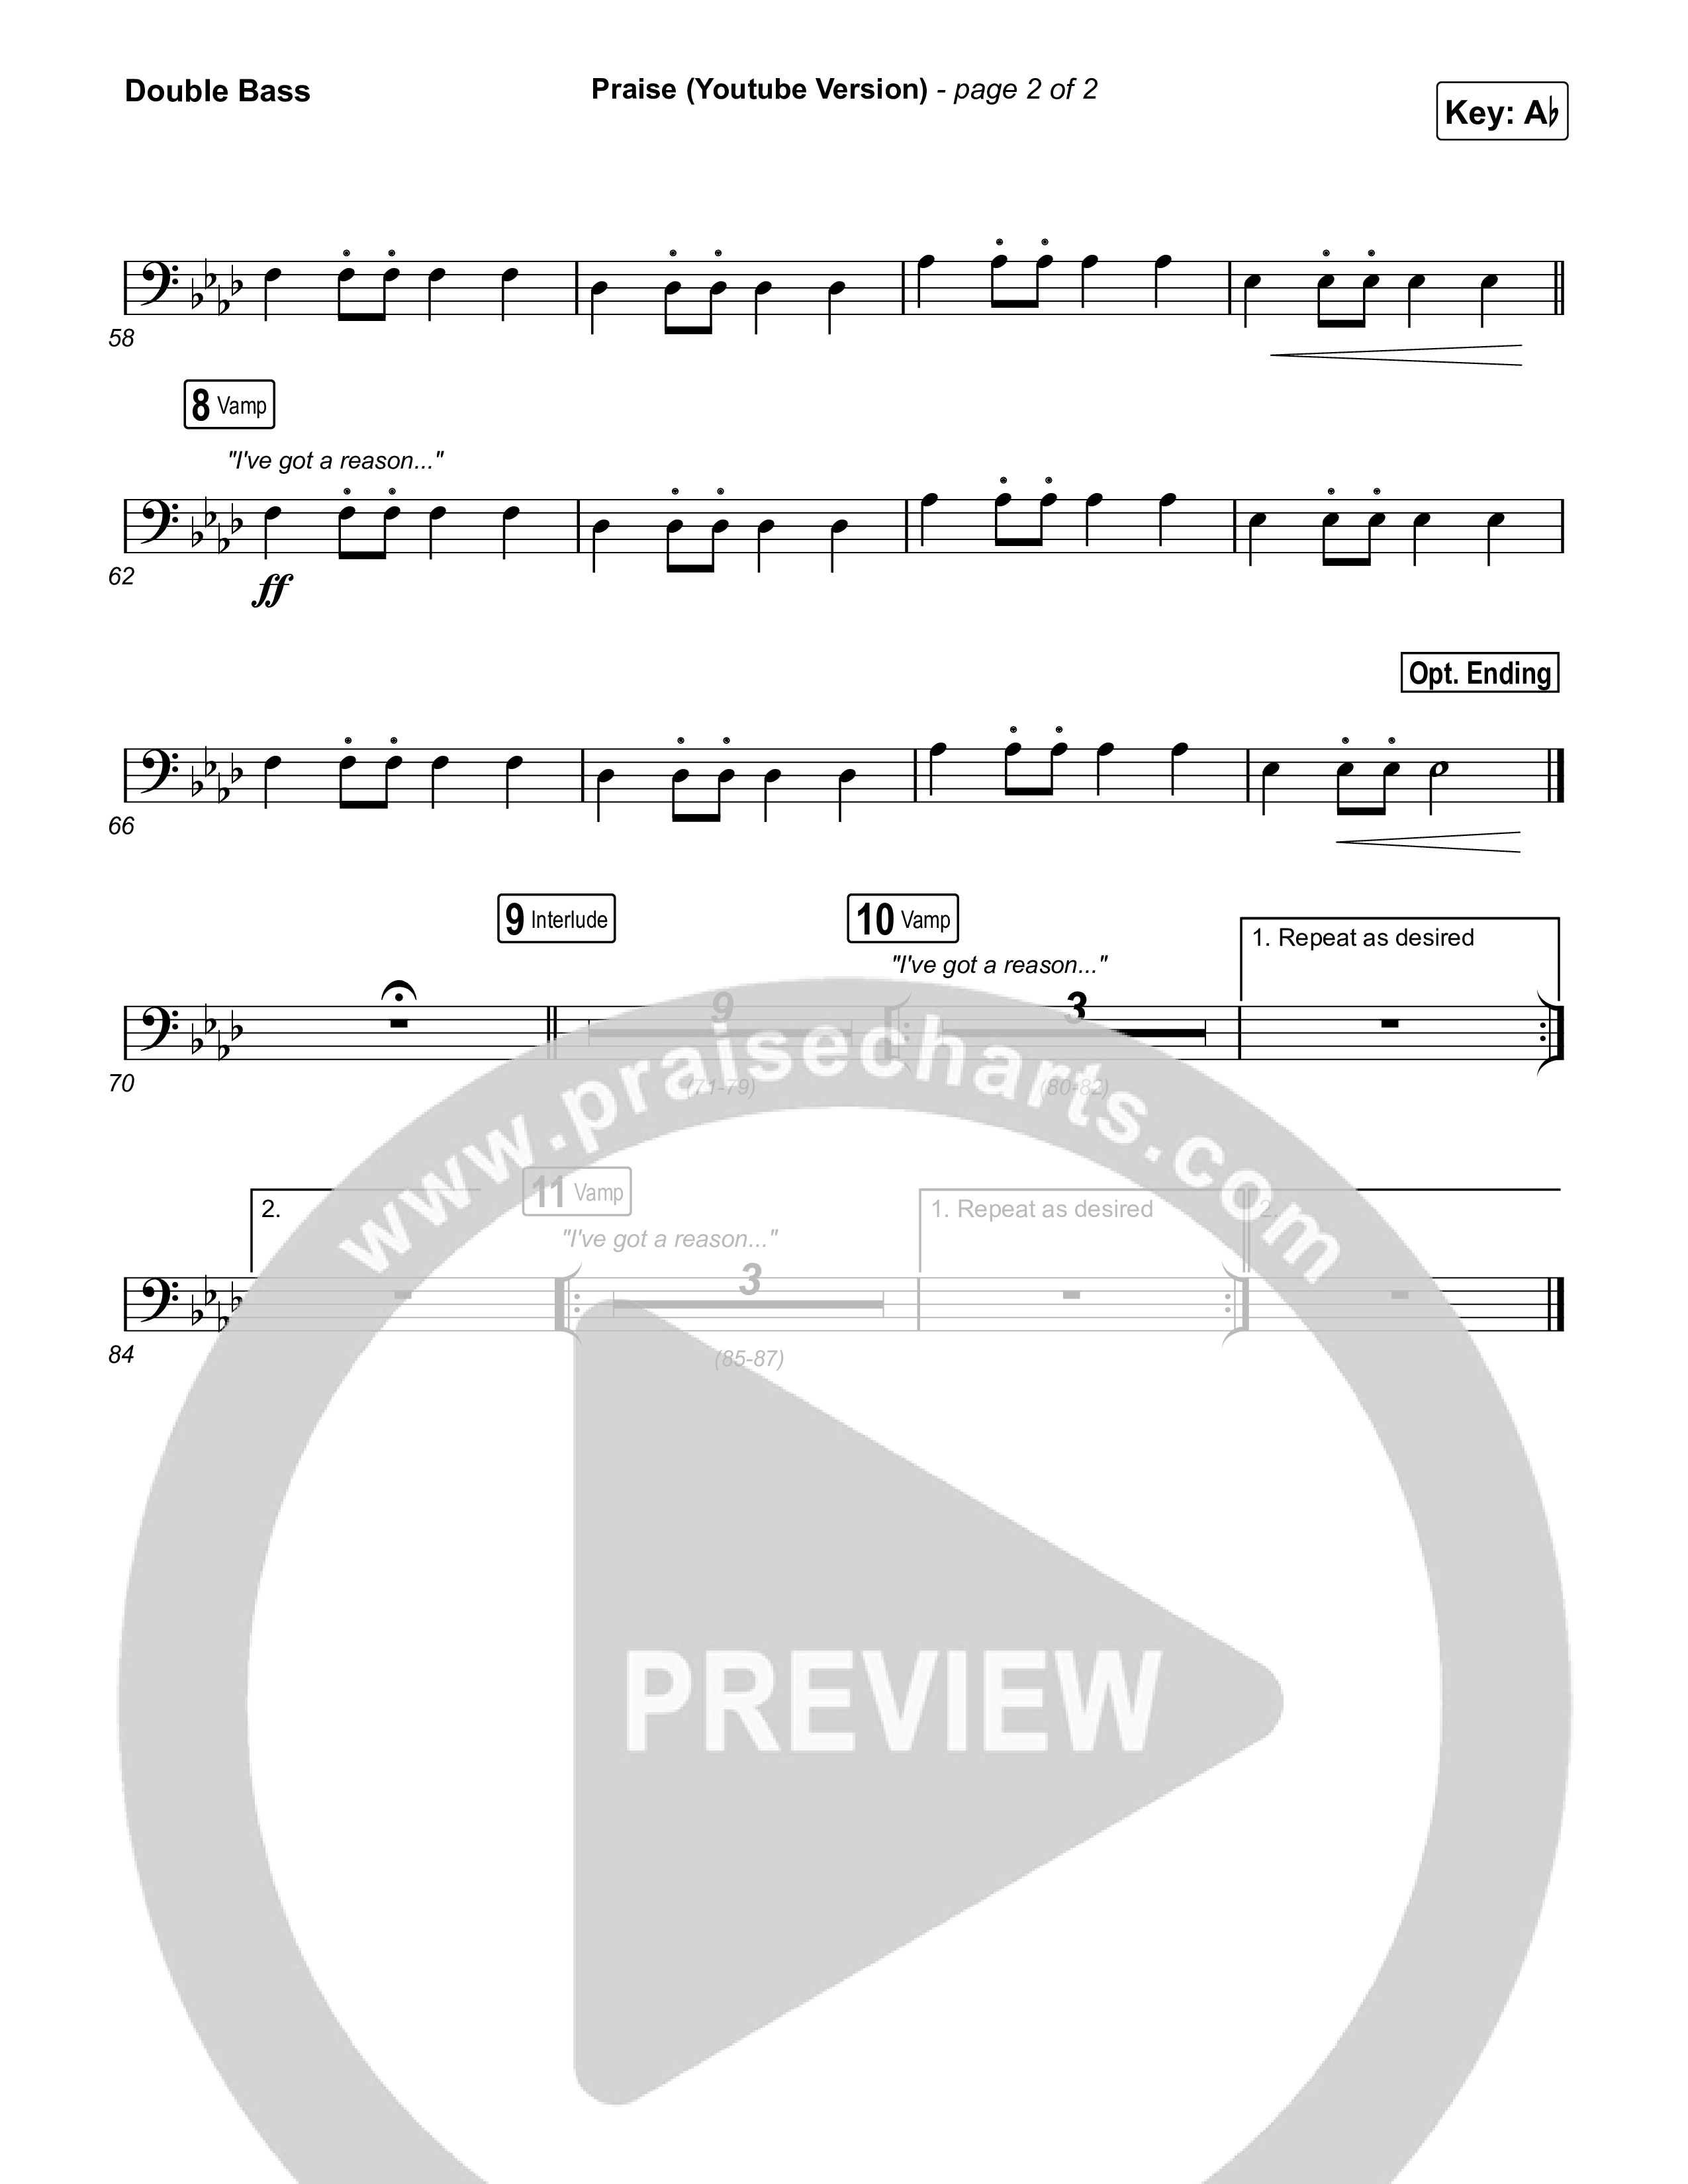 Praise String Bass (Elevation Worship / Elevation Choir)